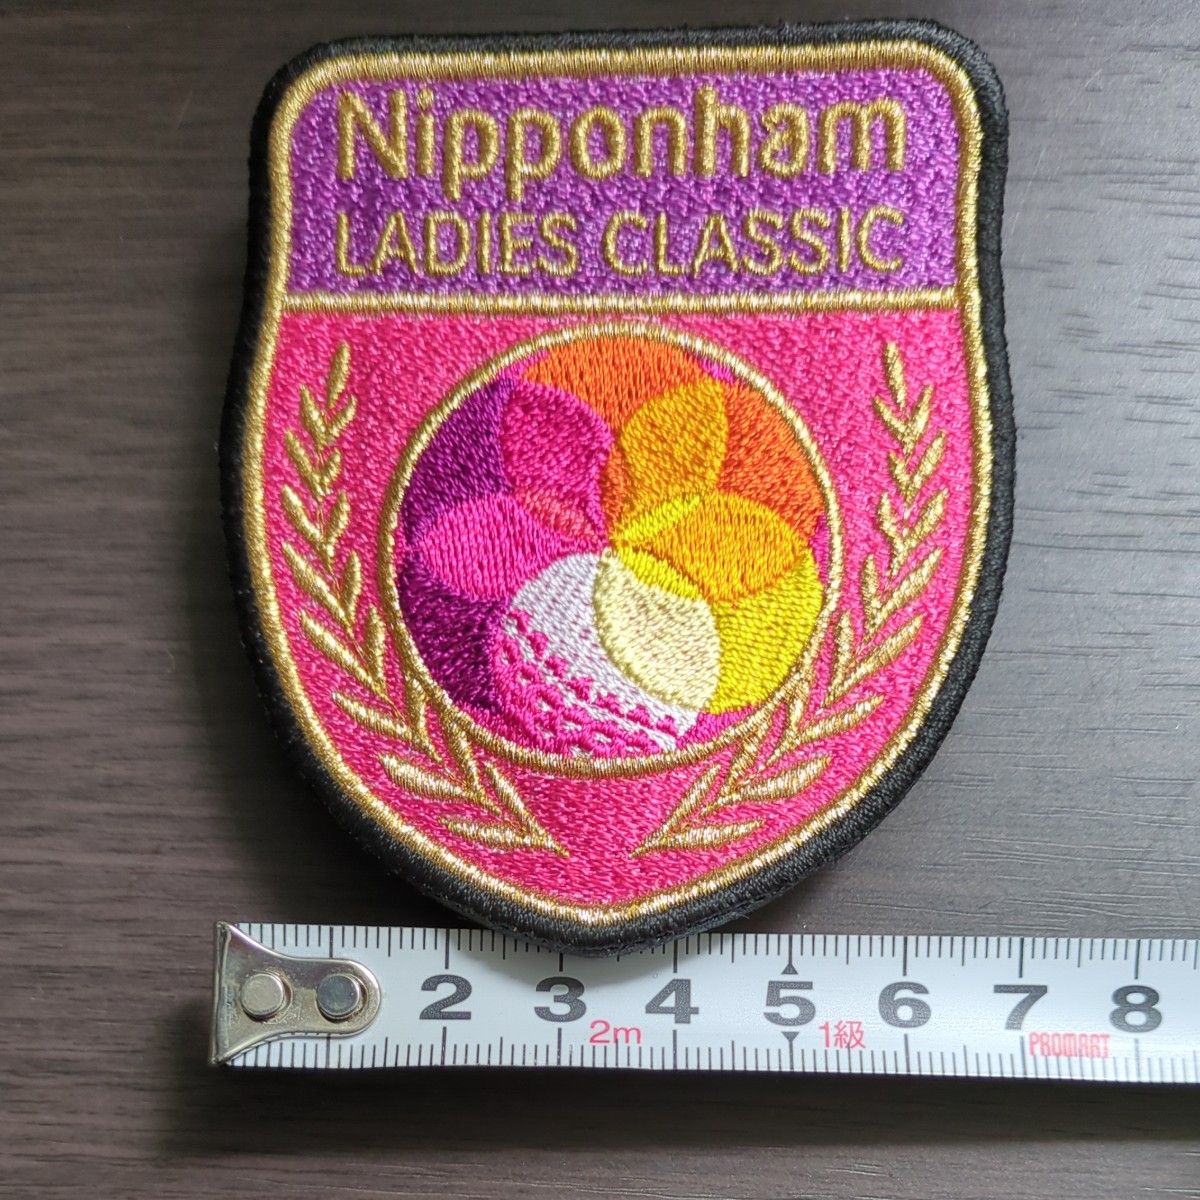 NIPPONHAM LADIES CLASSIC ニッポンハムレディースクラシック ゴルフ ワッペン